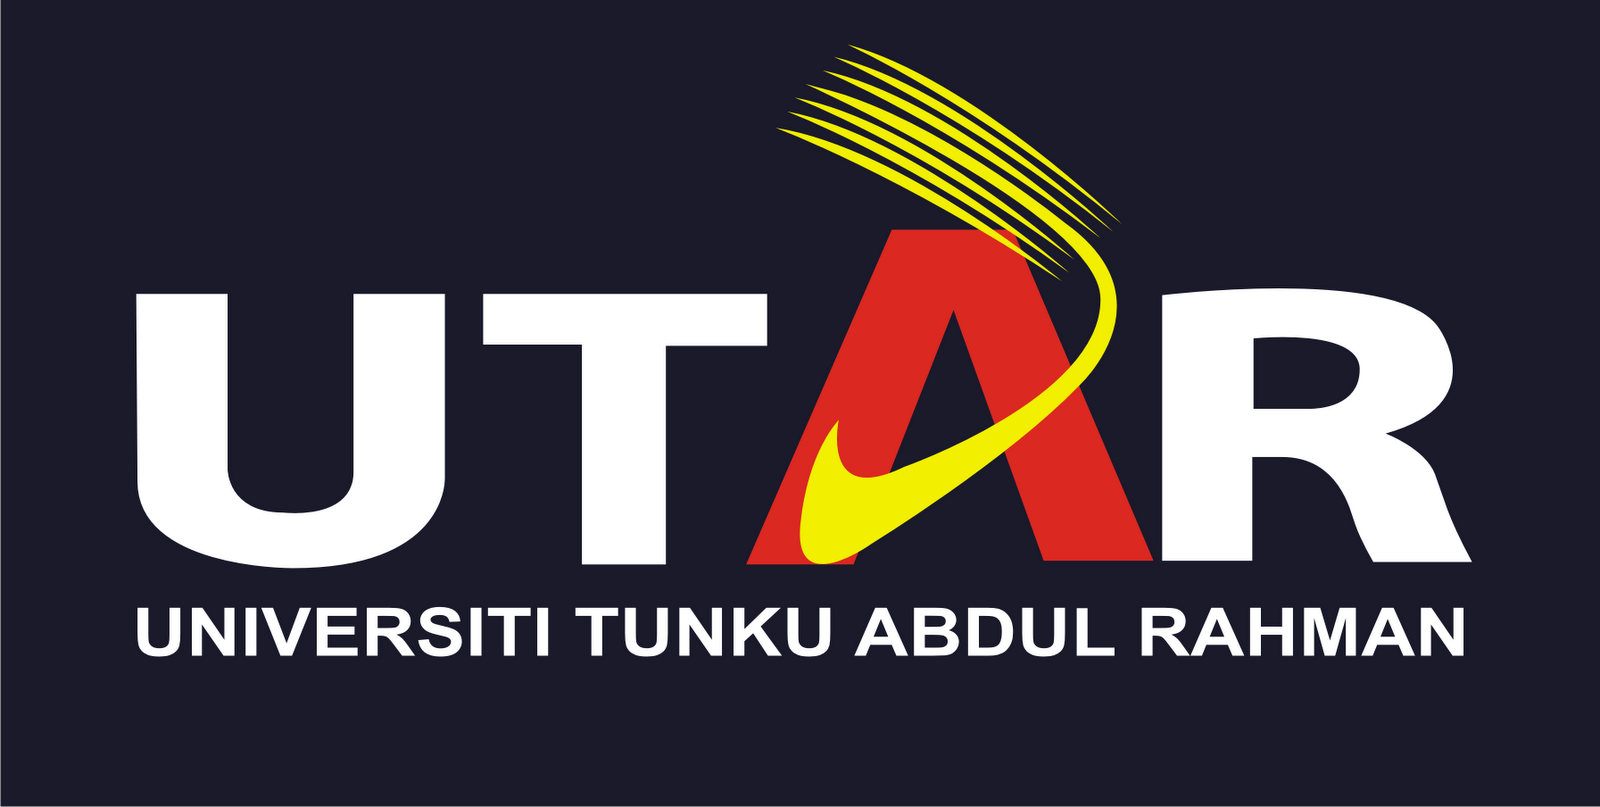 Student Exchange Program at Universiti Tunku Abdul Rahman (UTAR